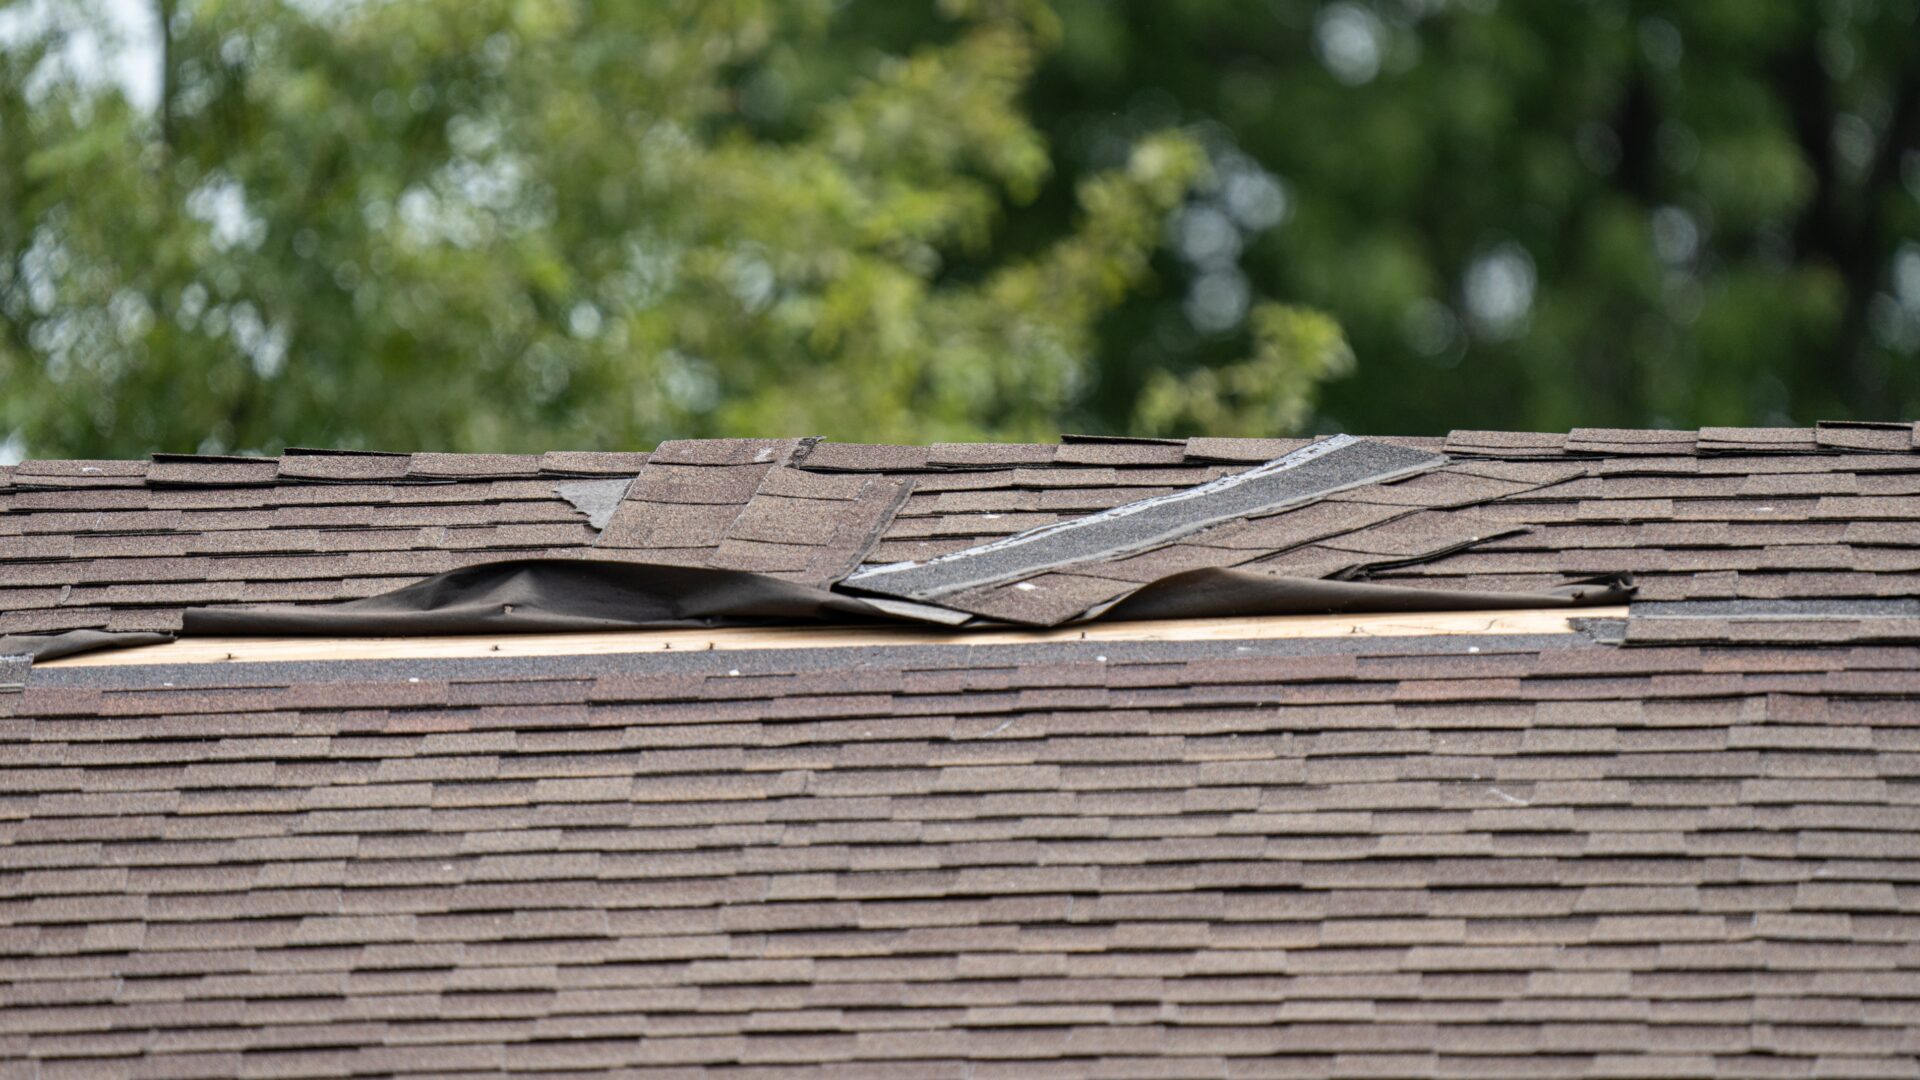 A shingle roof with damage needing repair